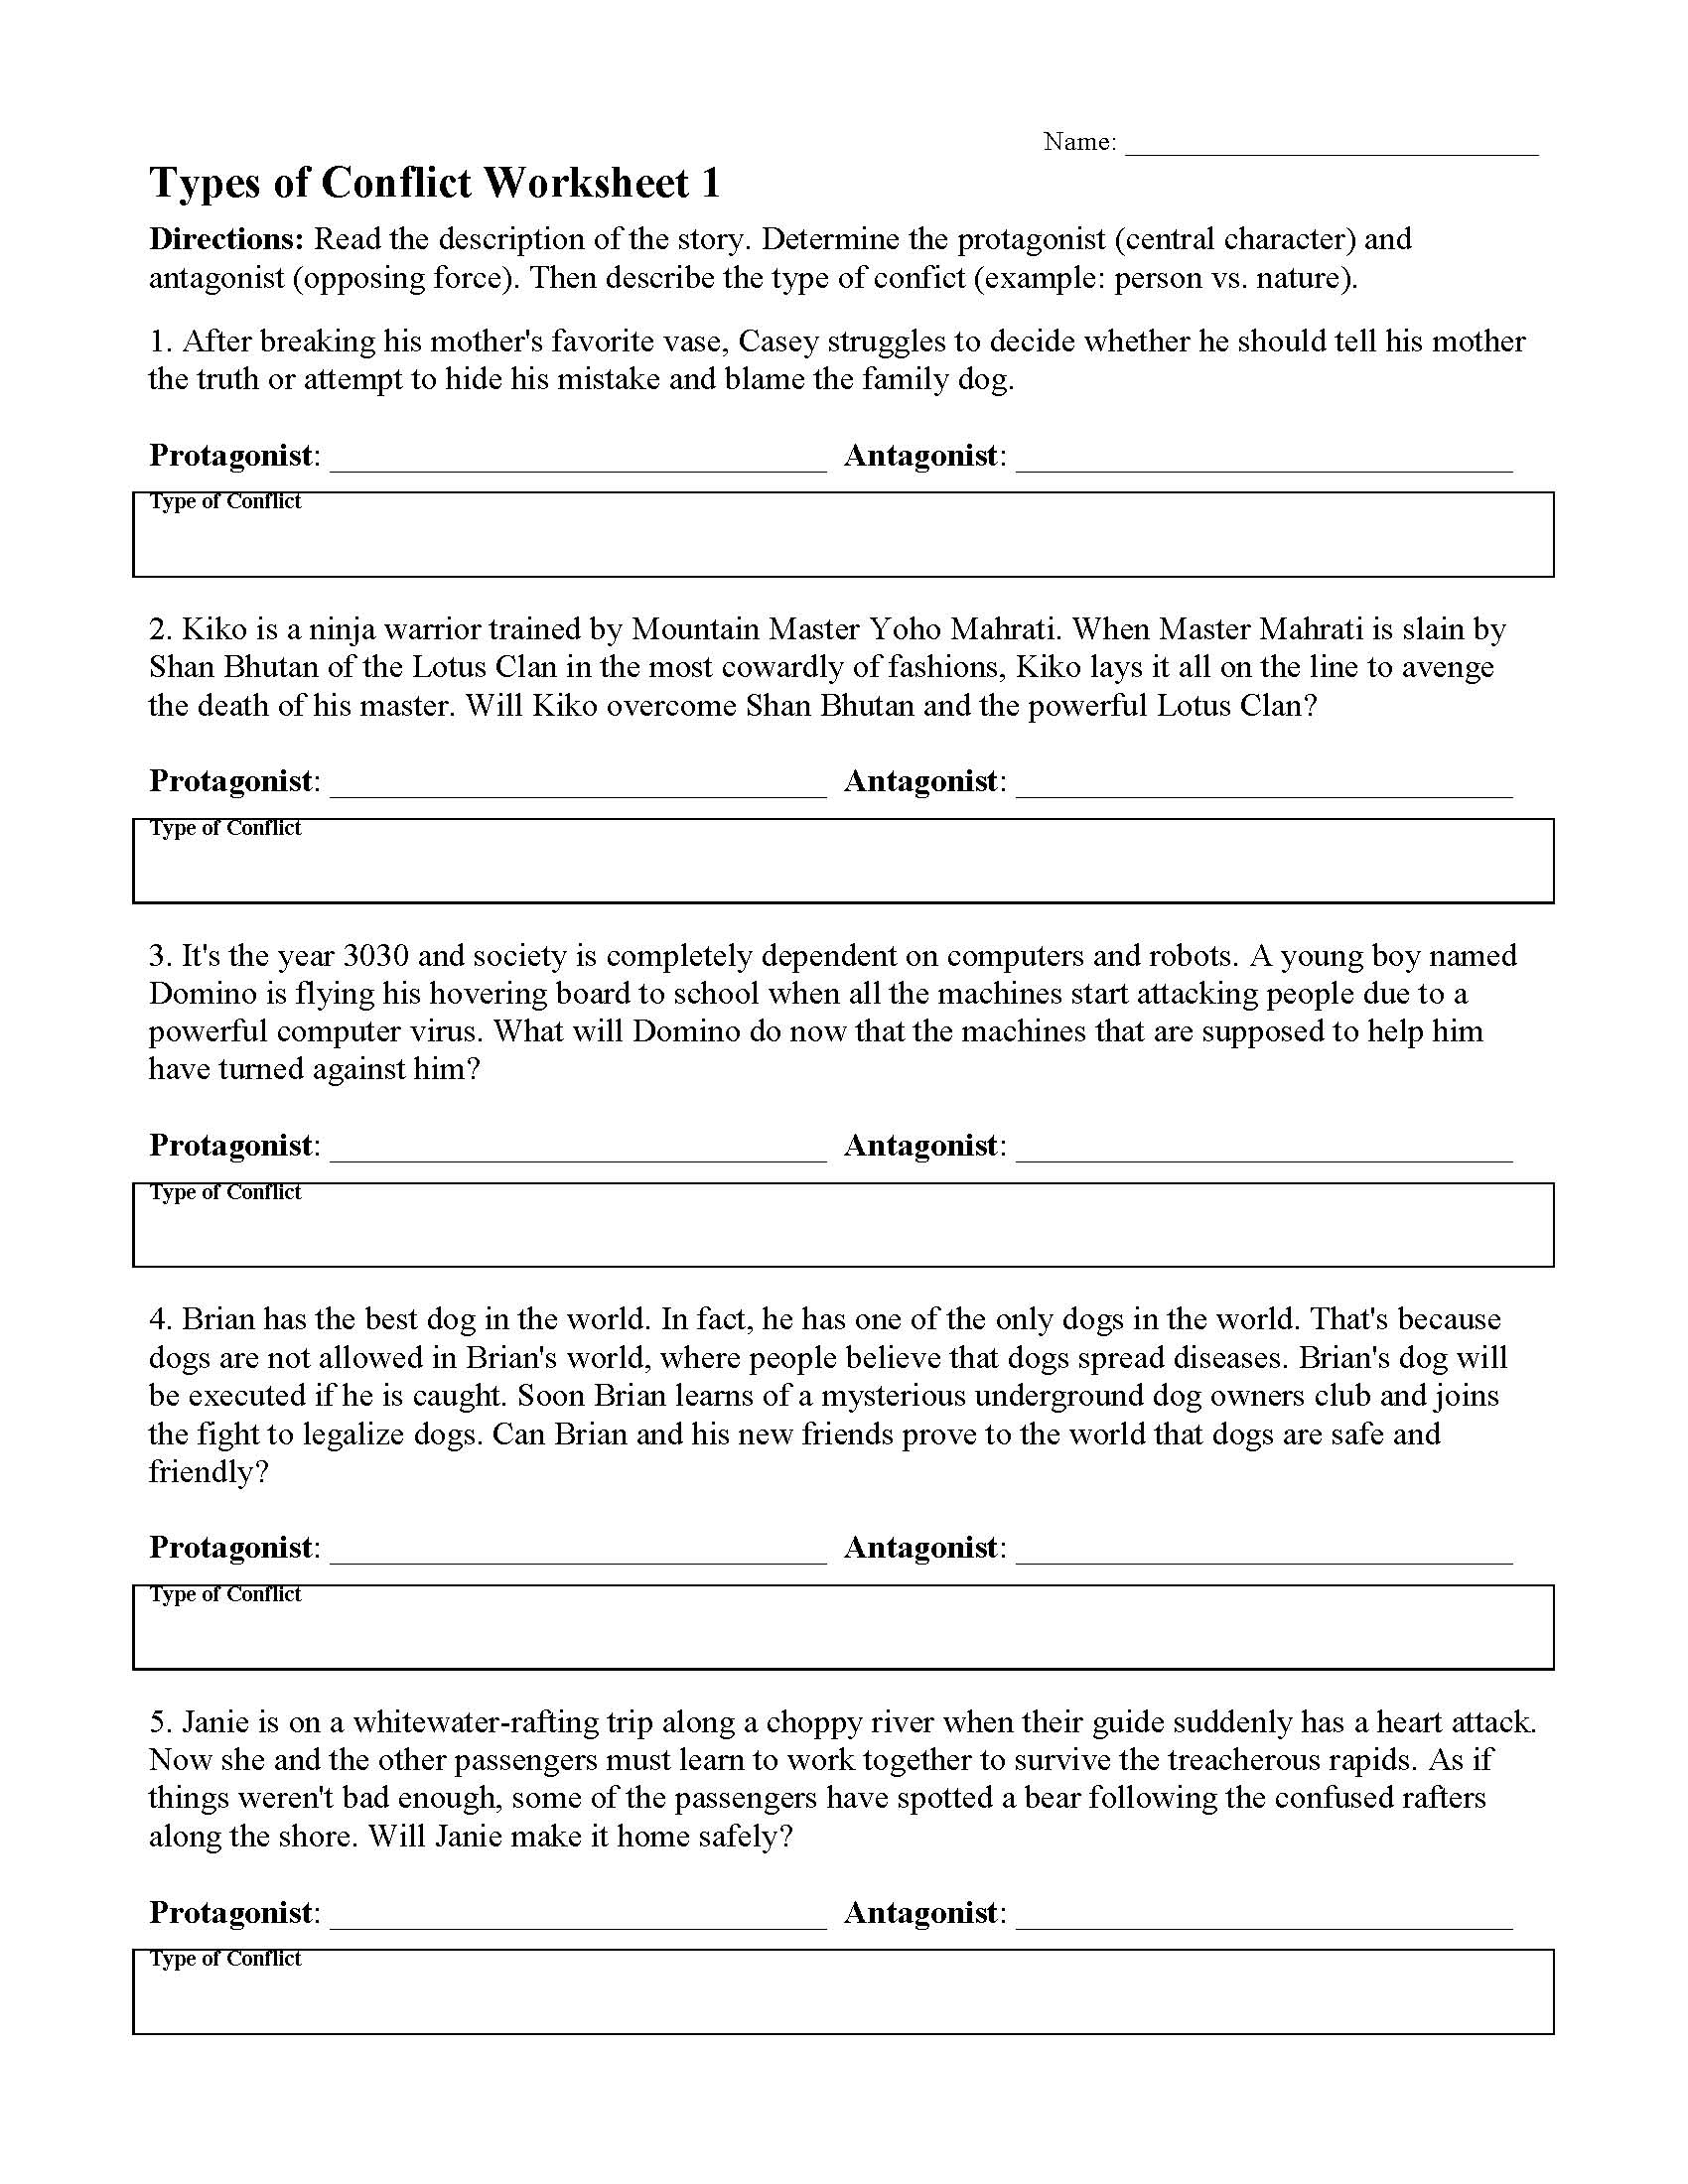 Types of Conflict Worksheet 11  Reading Activity Regarding Protagonist And Antagonist Worksheet